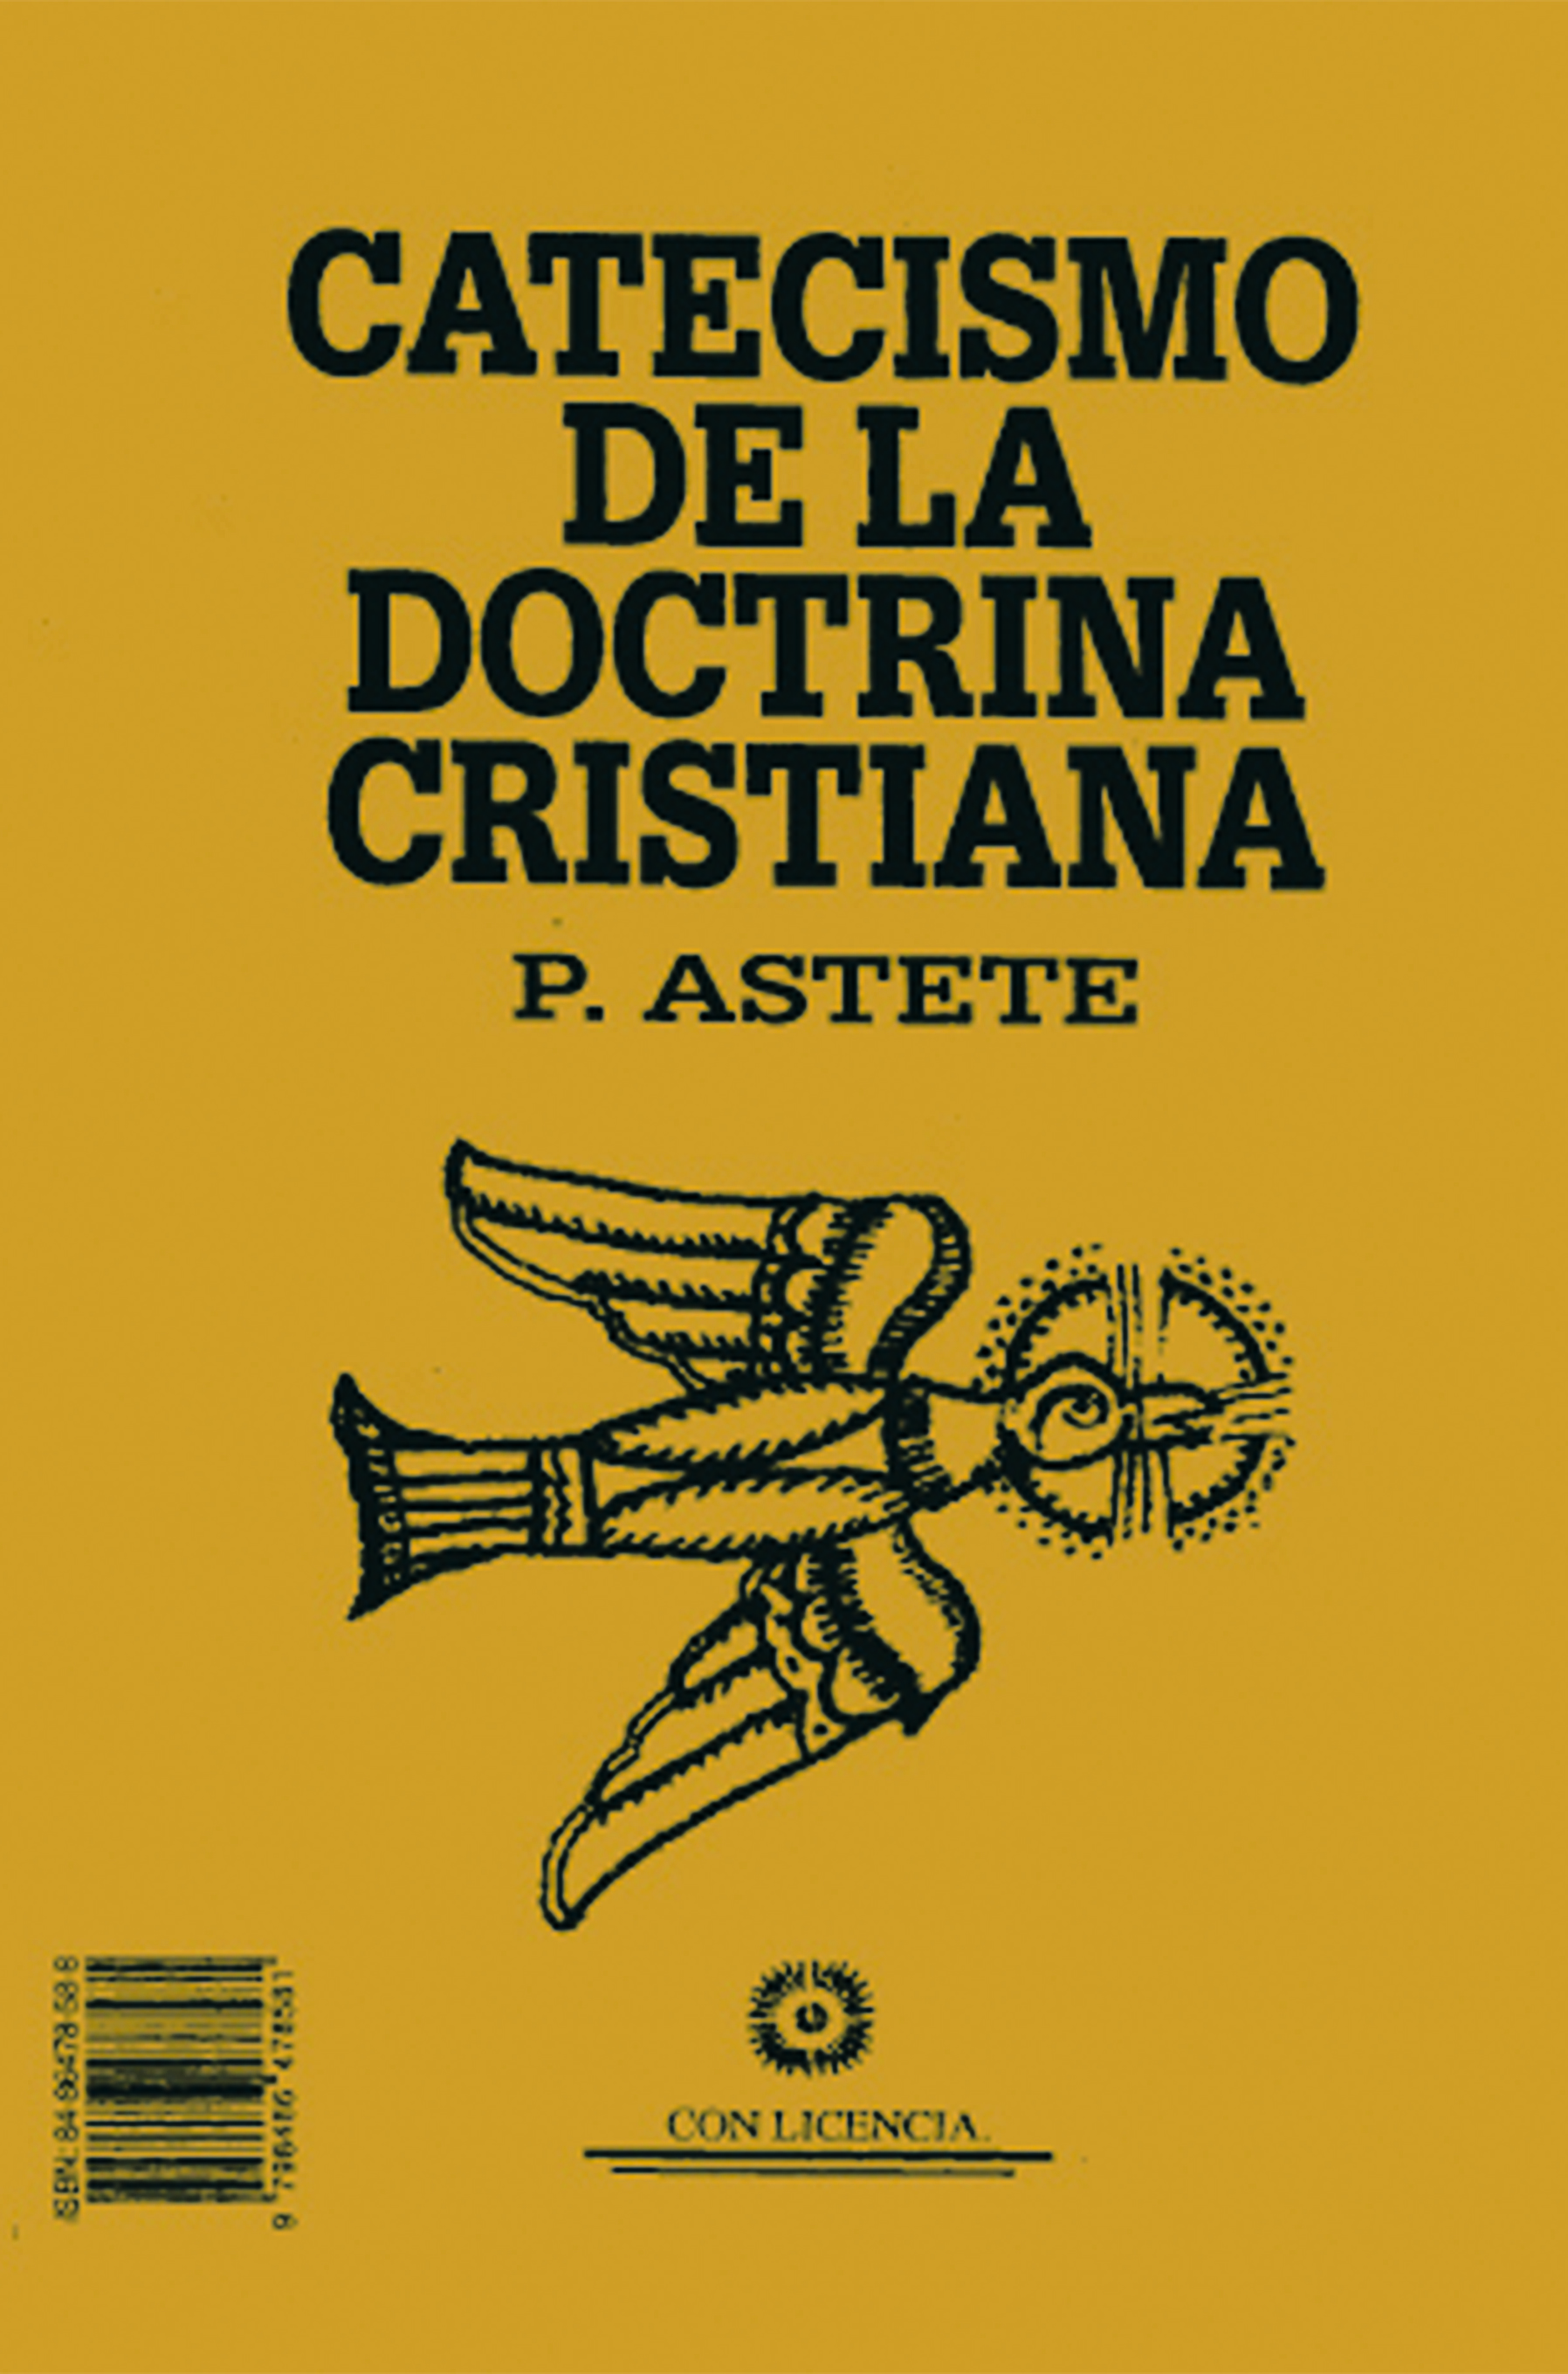 Ediciones Maeva - Otros Libros - Catecismo de la doctrina cristiana